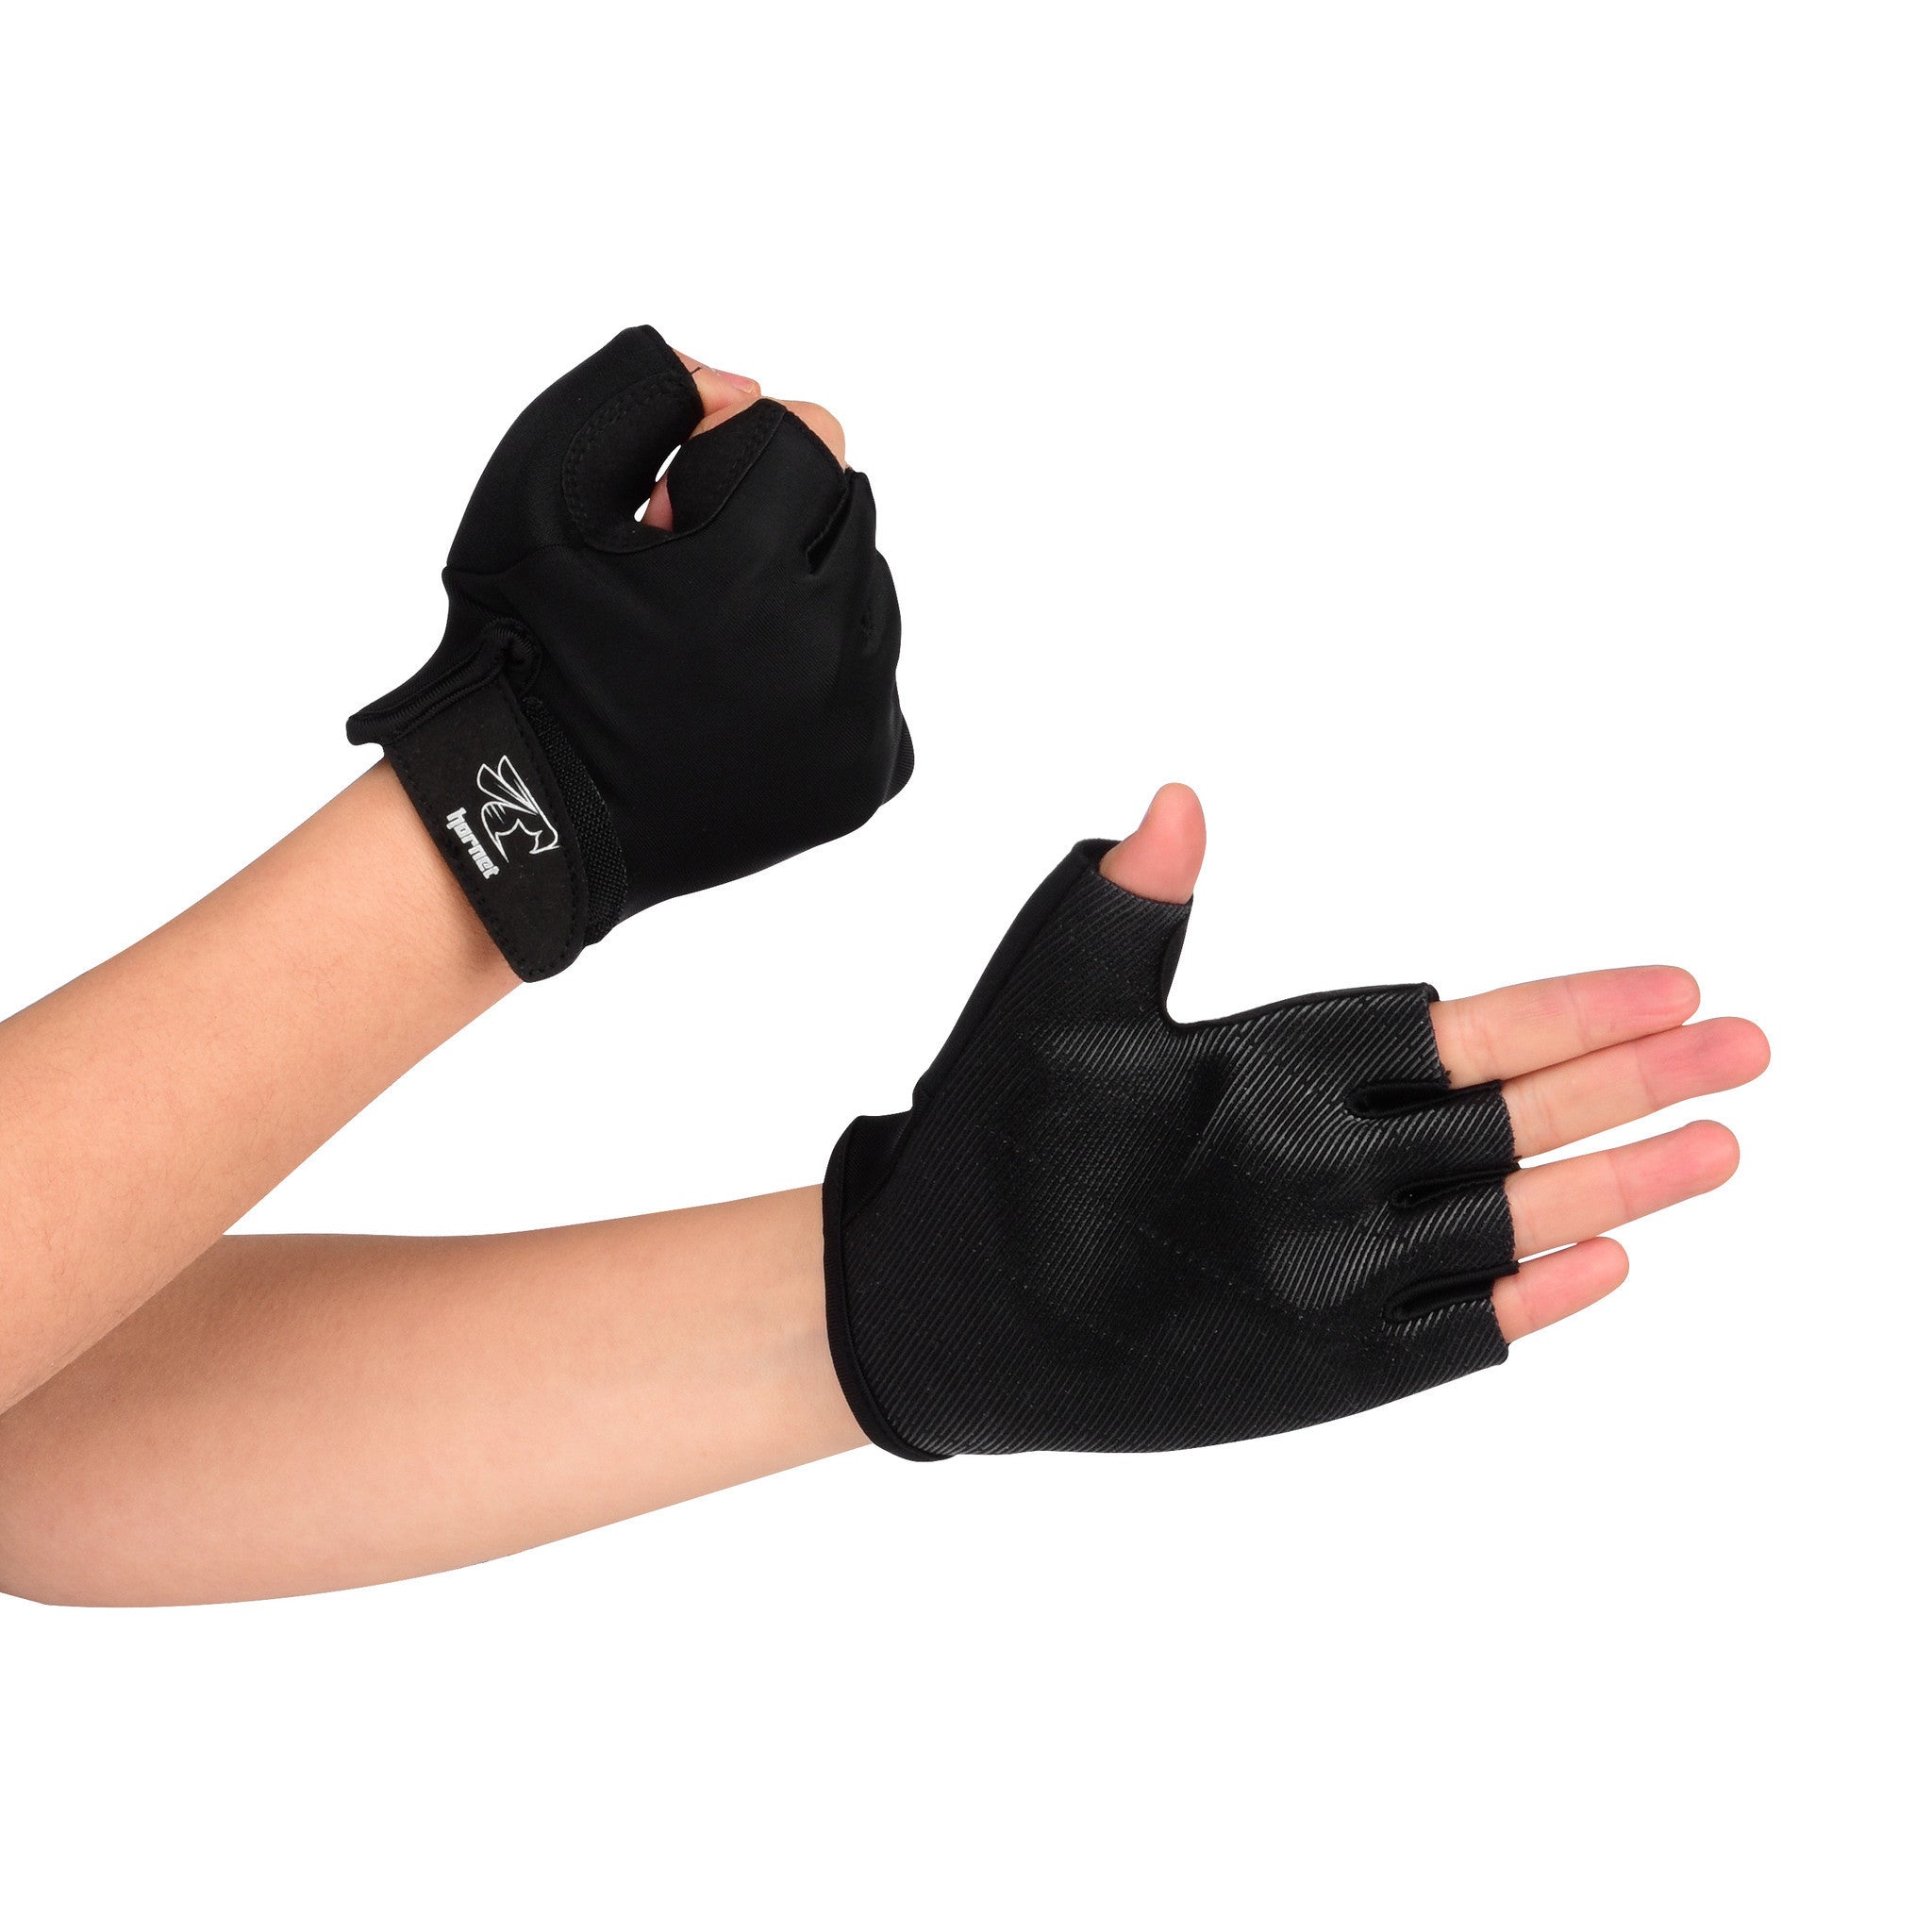 NRS Neoprene Paddling Gloves XS Grip Palms Blue Black 94612 Kayaking  Fishing